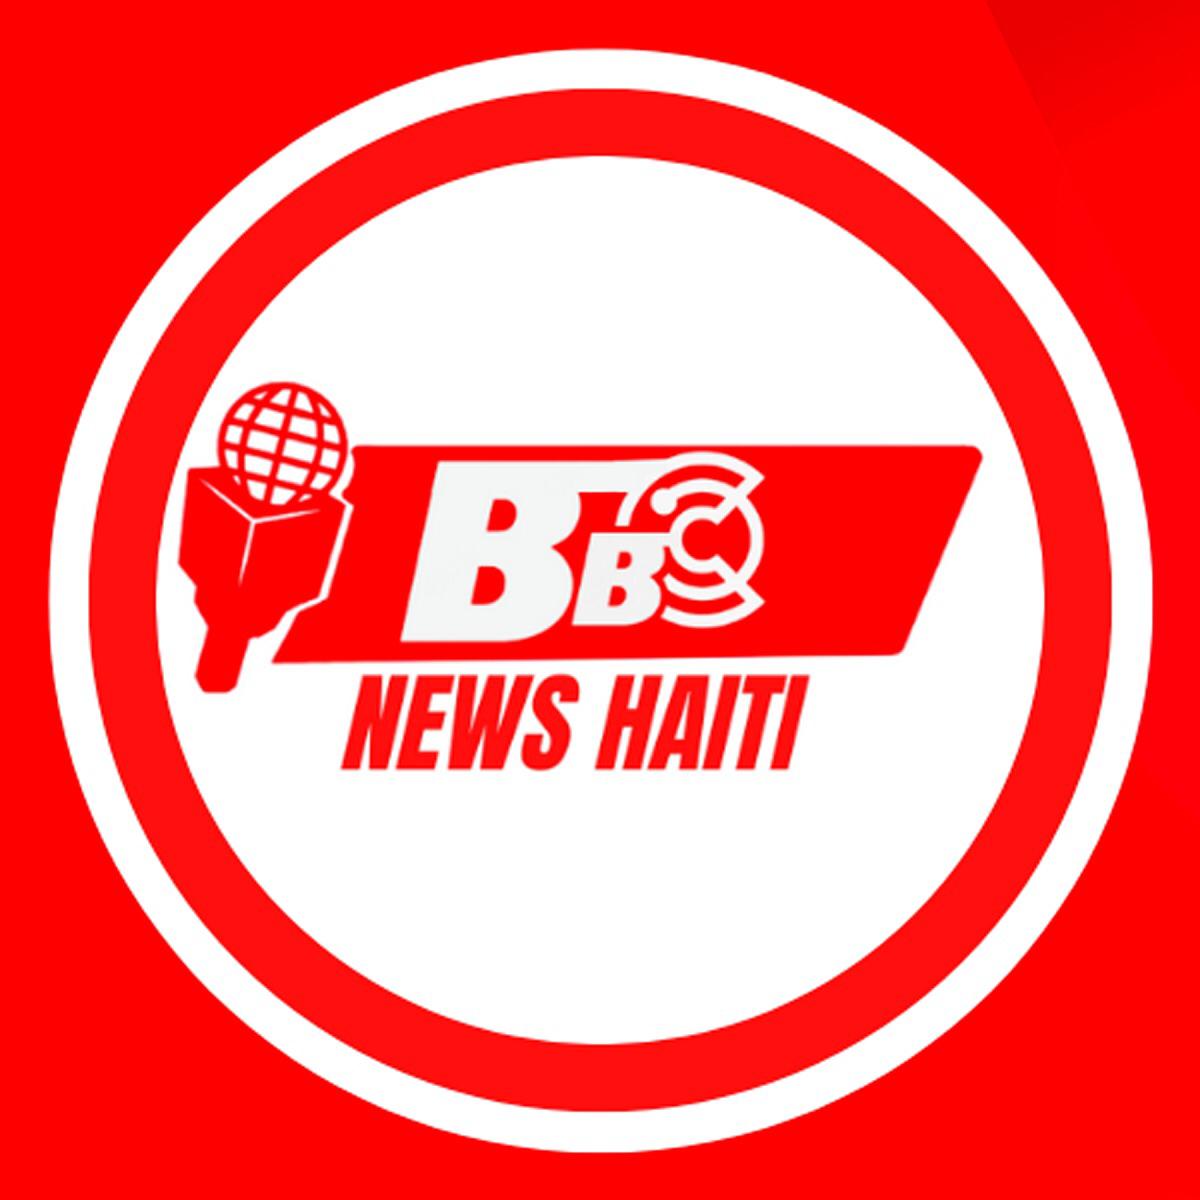 Radio BBC News Haiti 